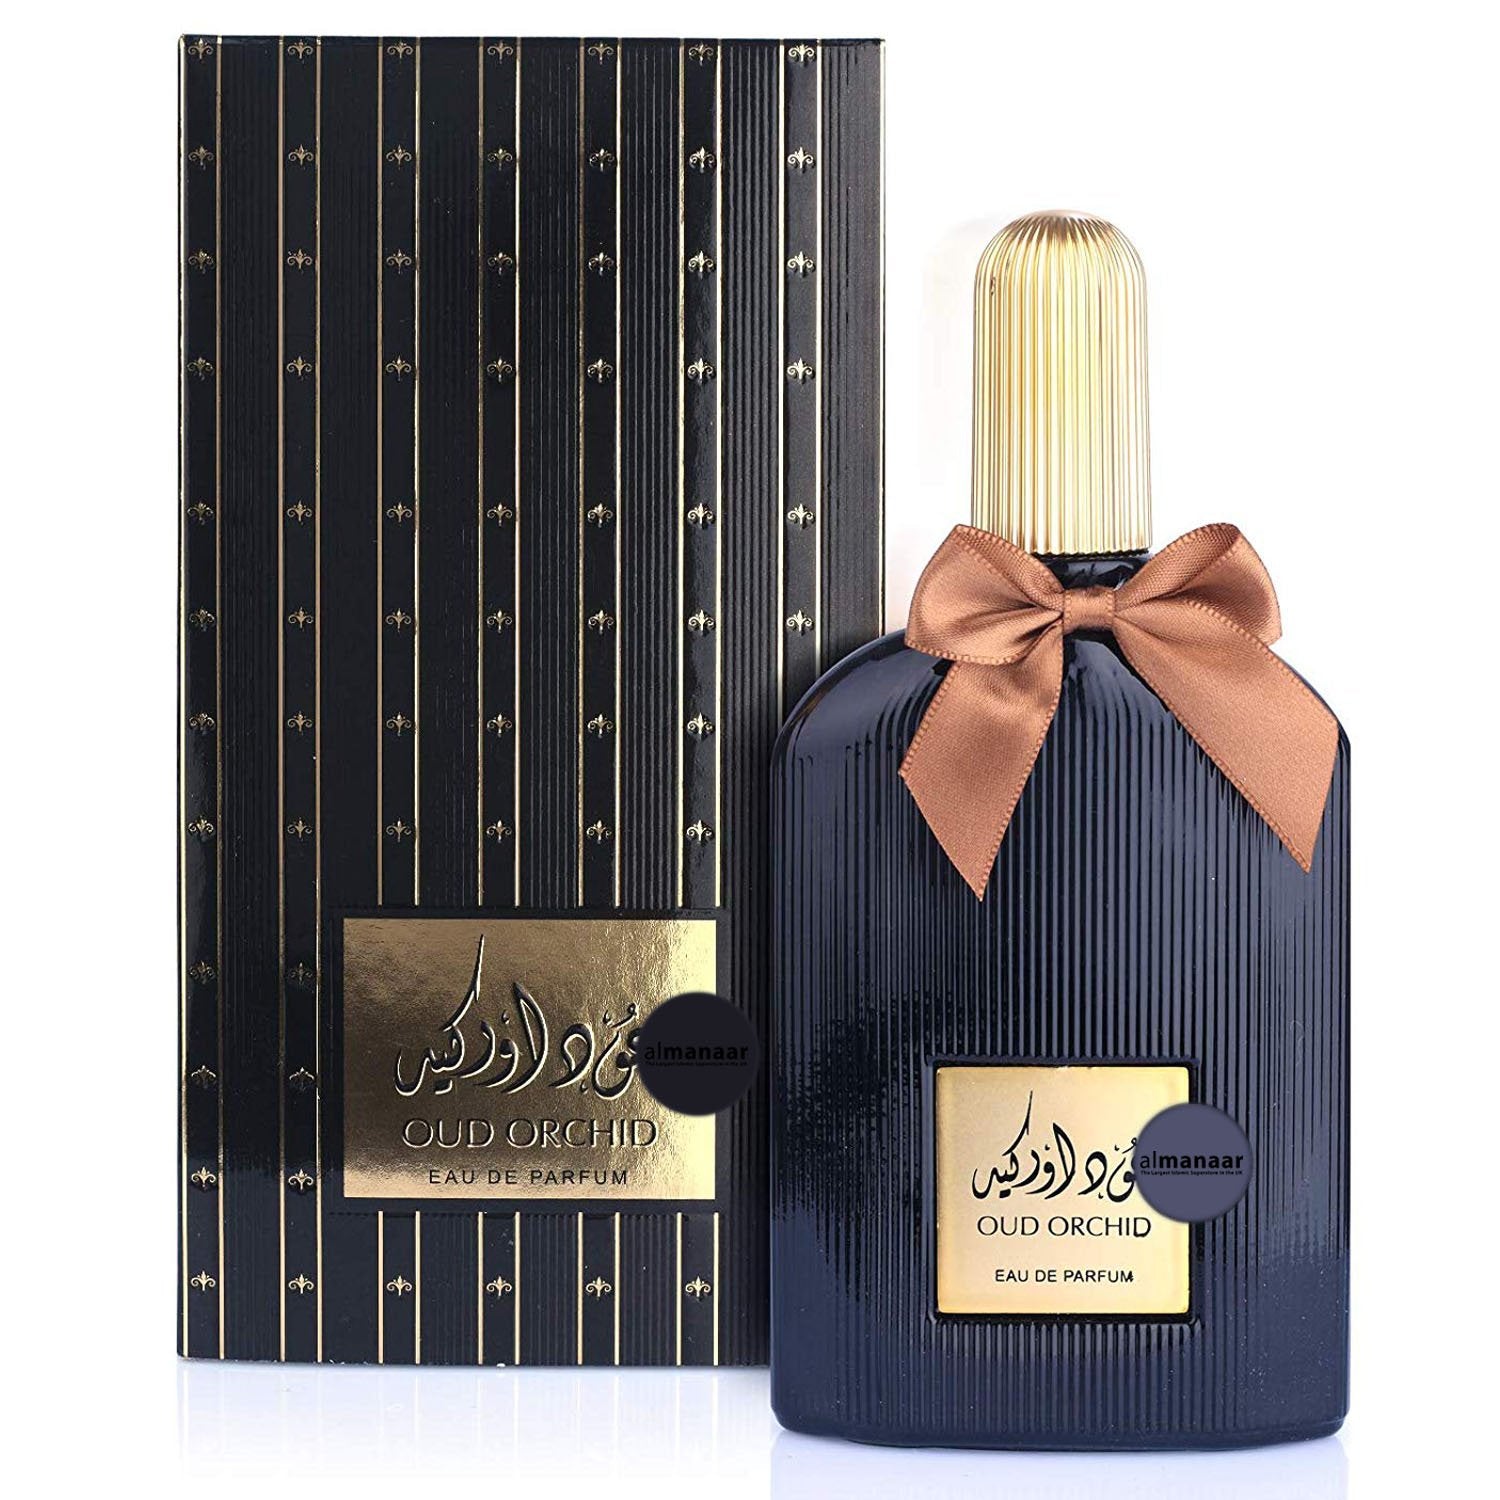 Oud Orchid (Black) Eau de Parfum 100ml Suroori-almanaar Islamic Store